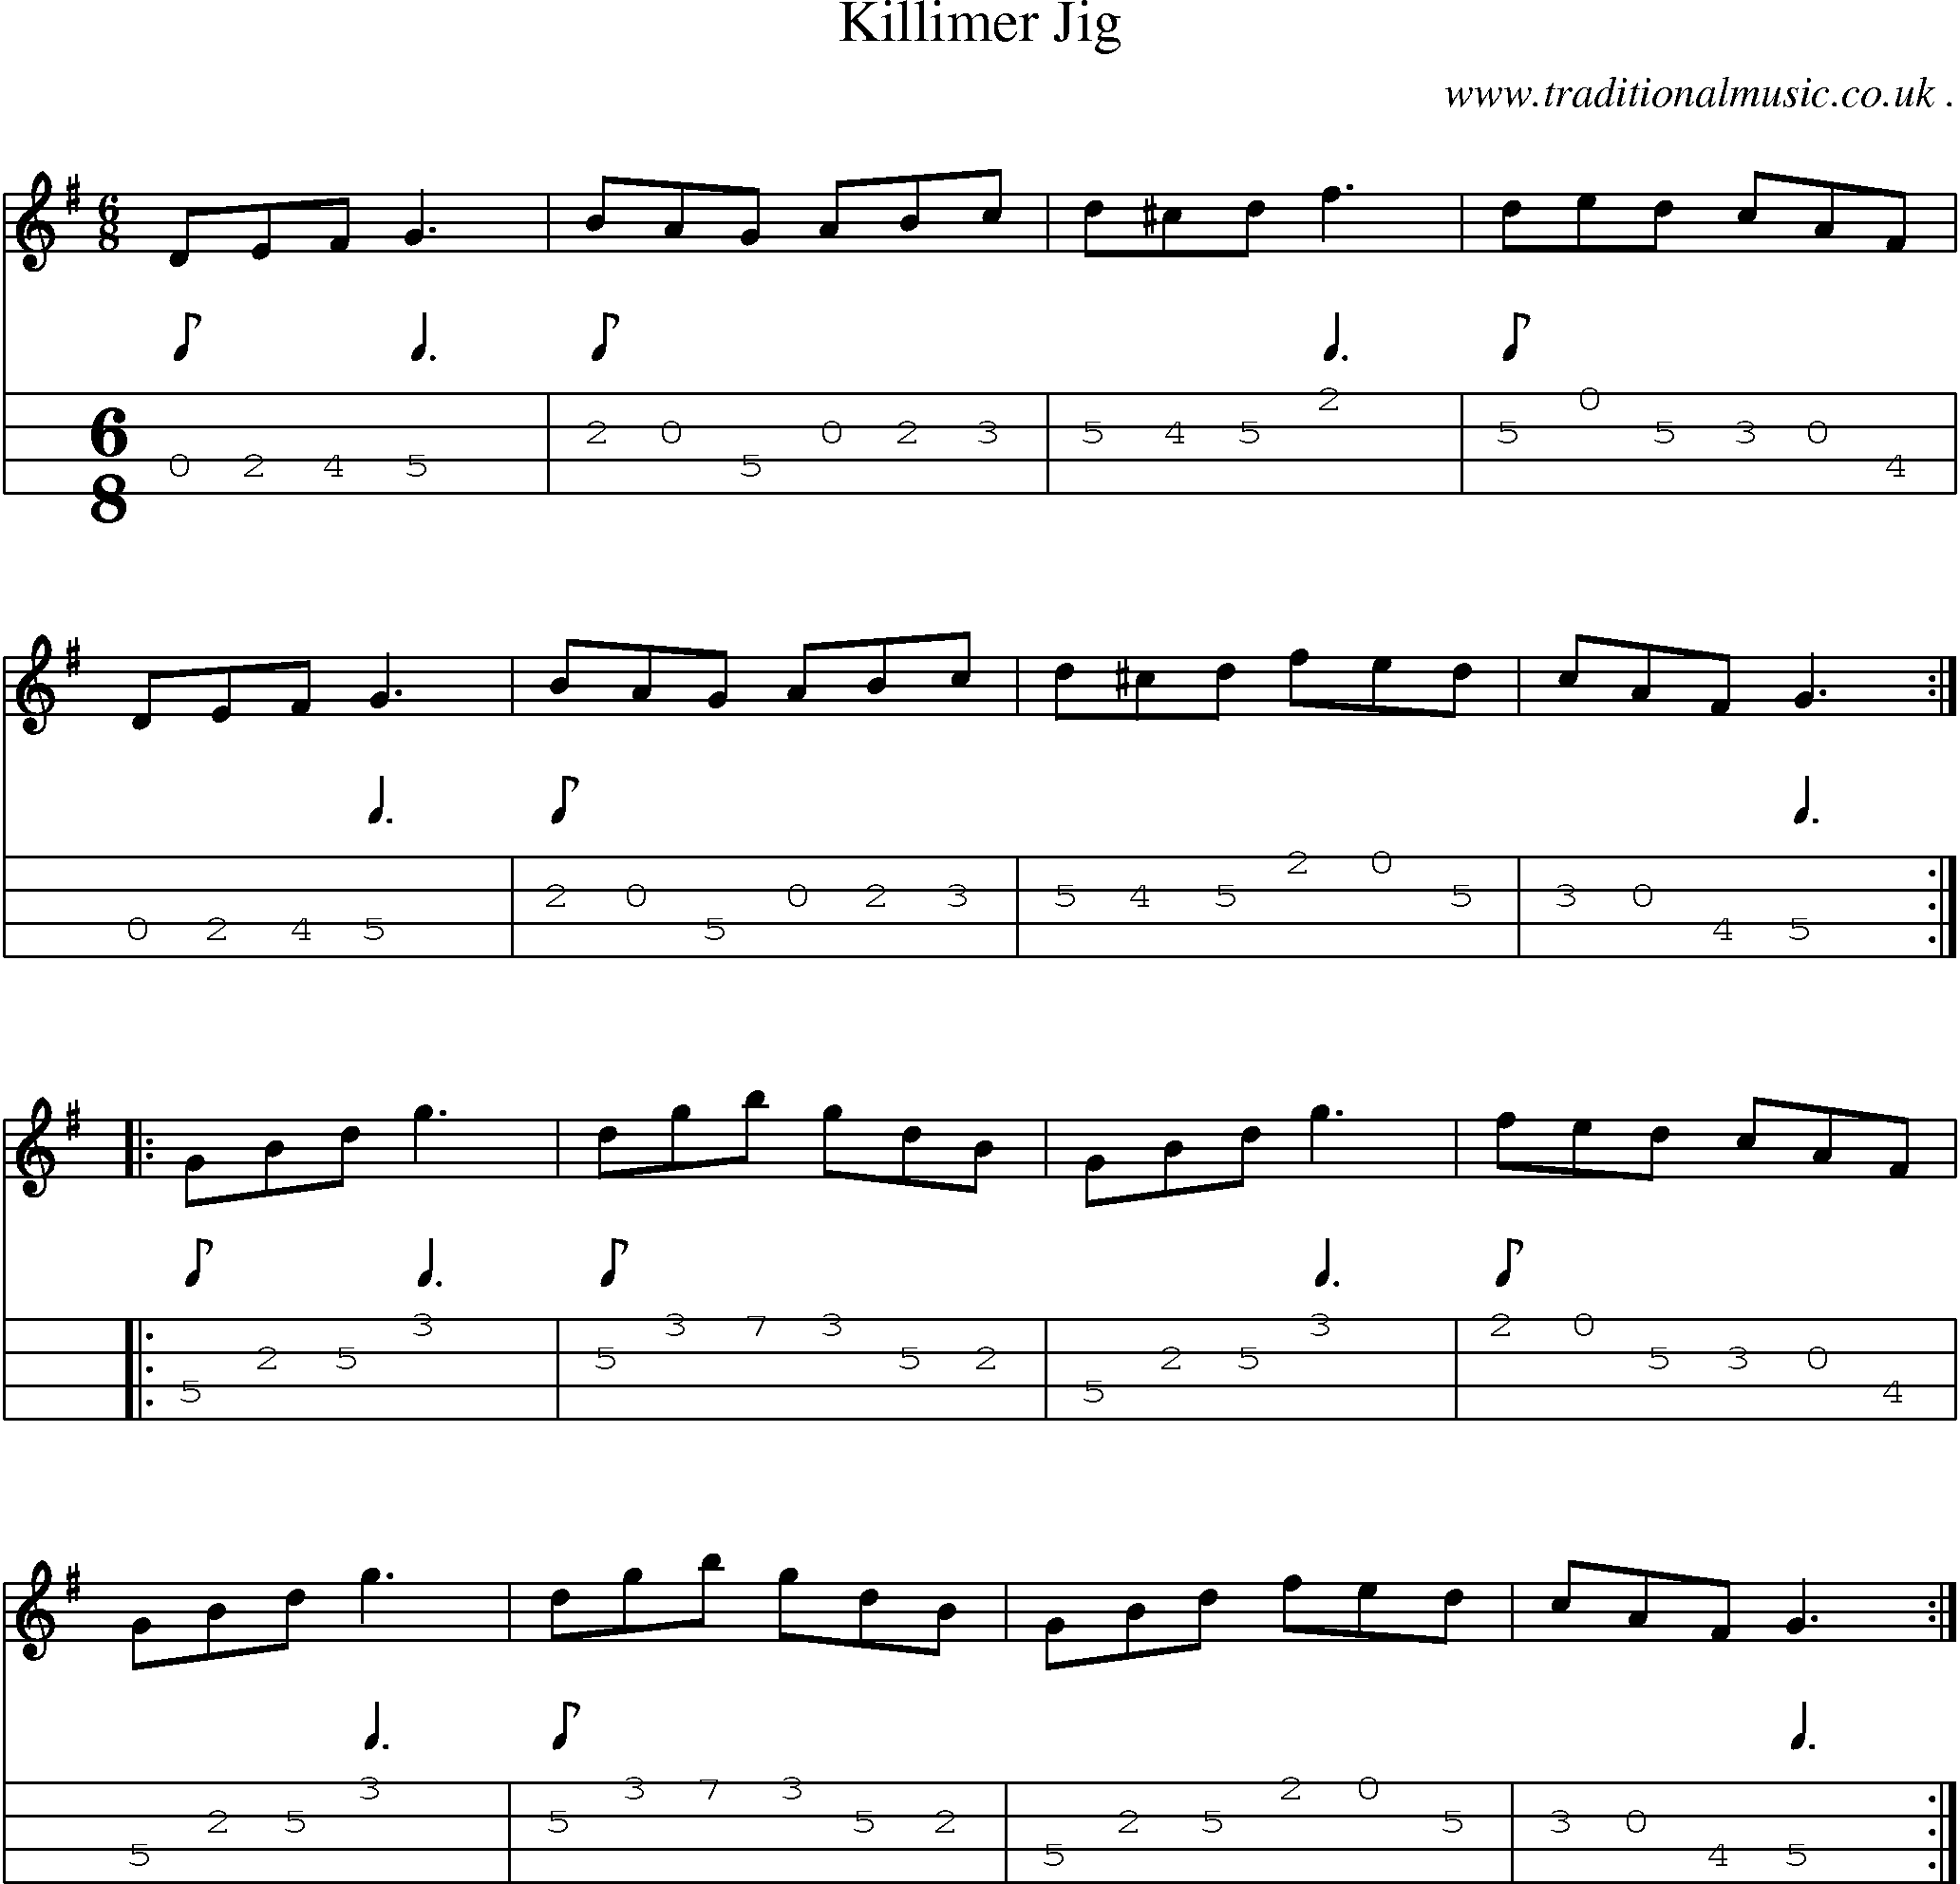 Sheet-Music and Mandolin Tabs for Killimer Jig